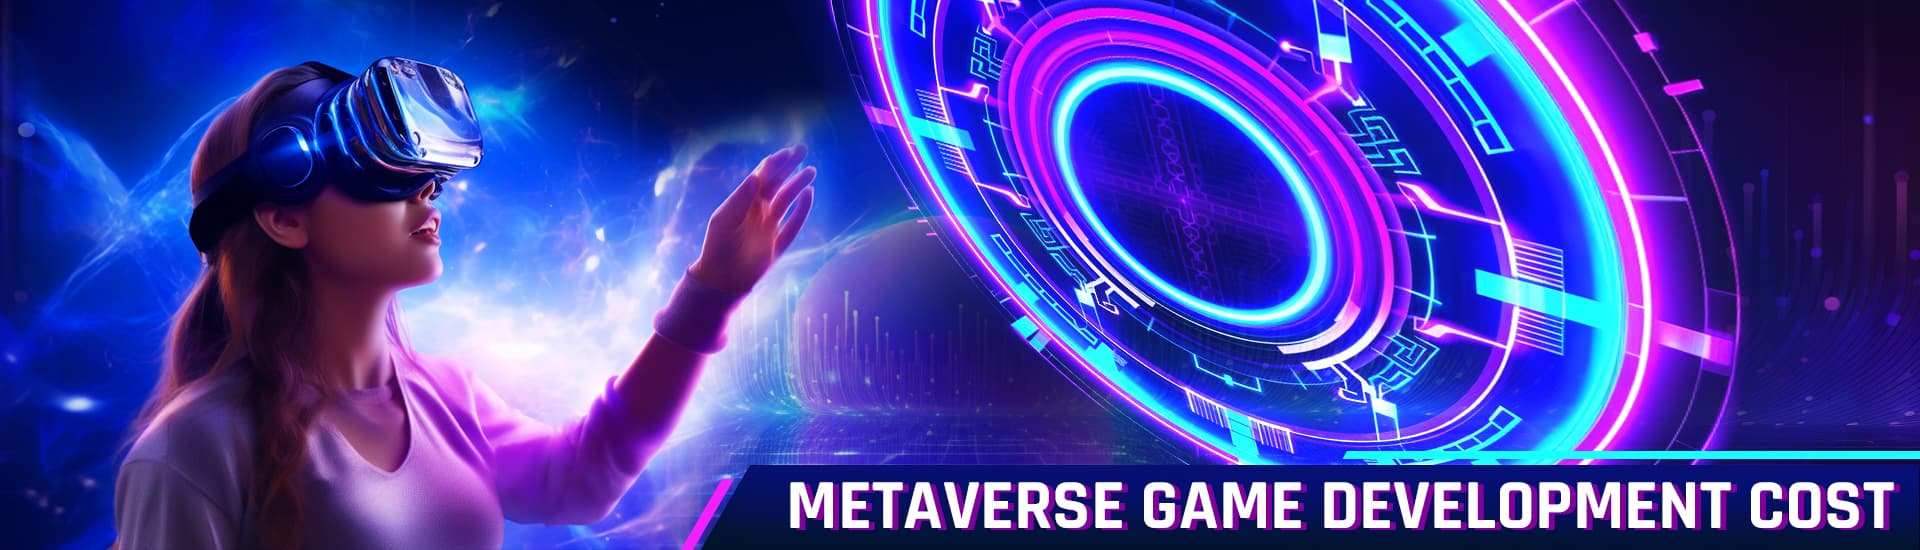 Metaverse game development cost